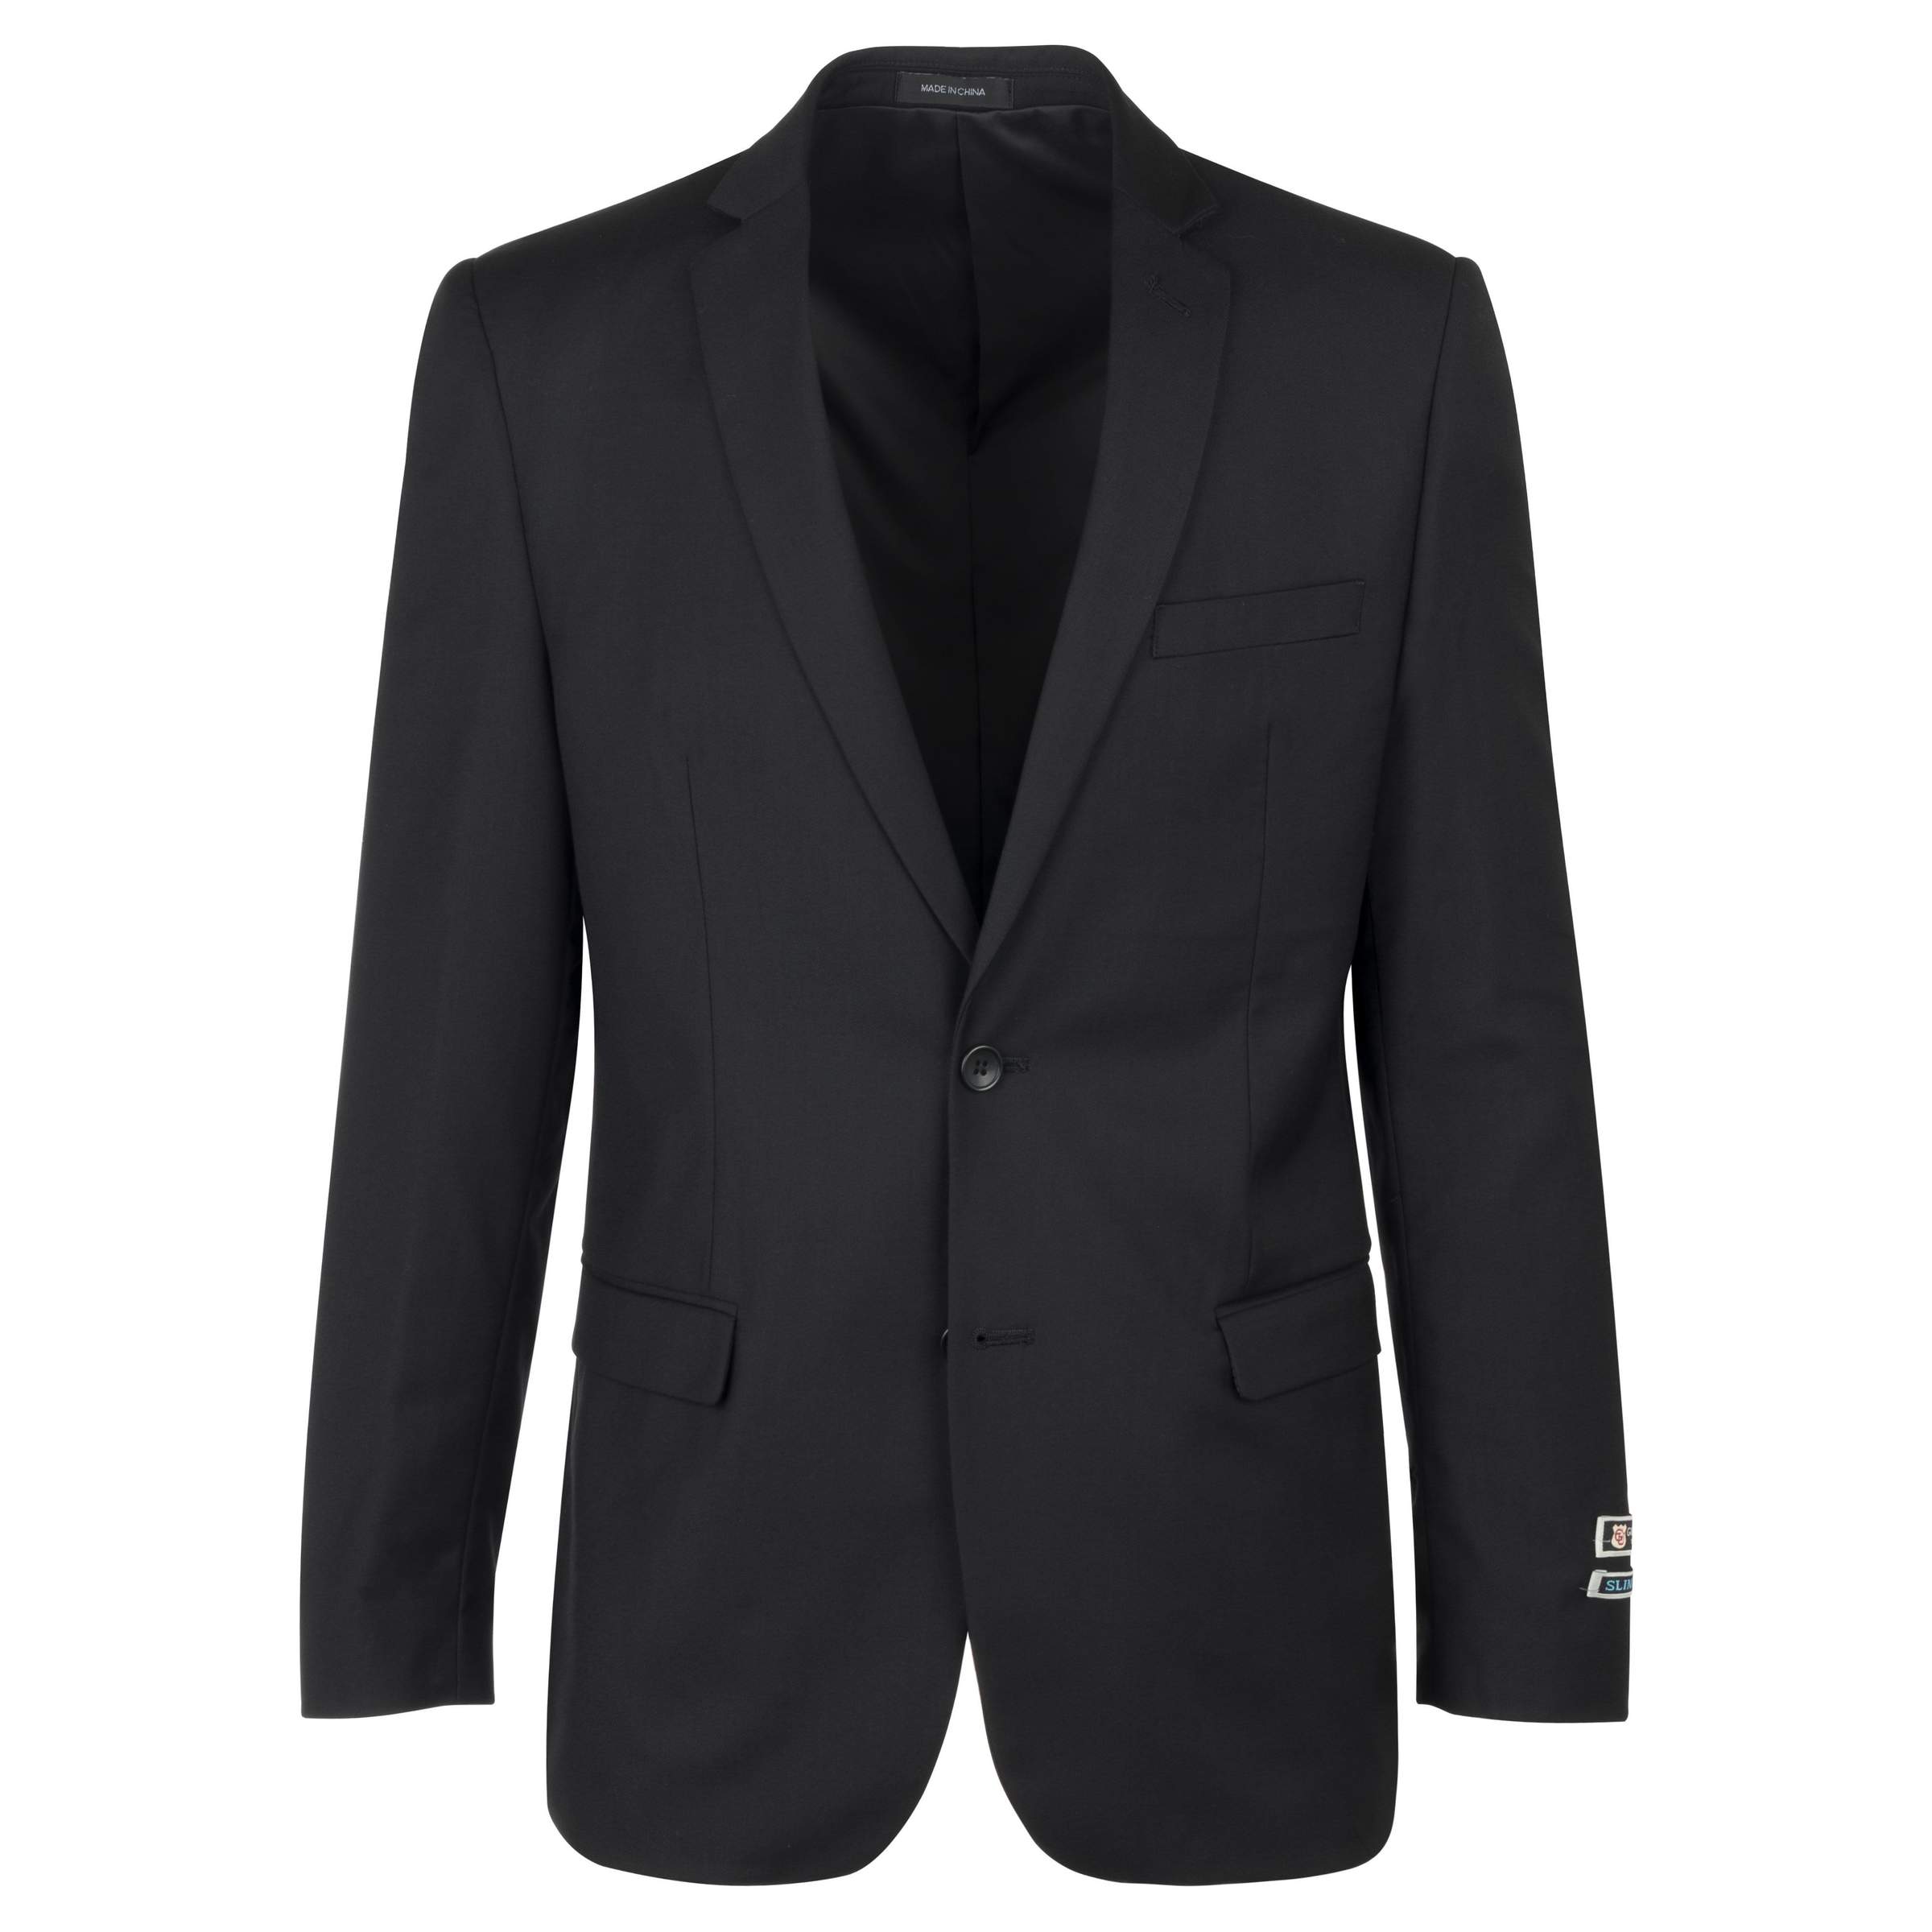 Men's Solid Black Modern Fit Suit